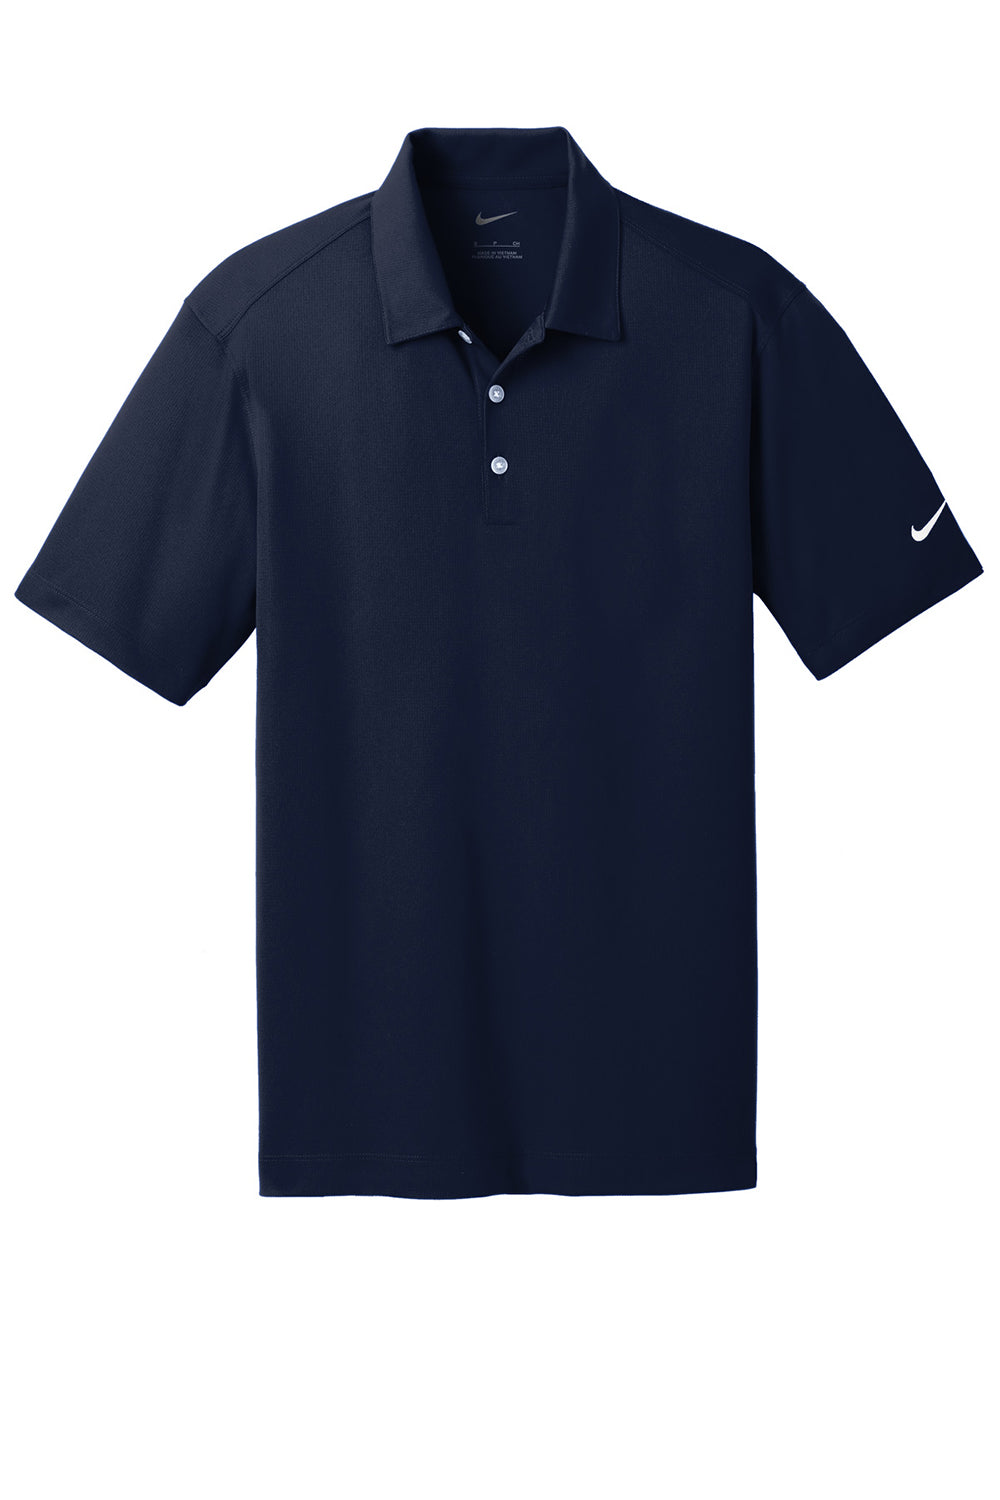 Nike 637167 Mens Dri-Fit Moisture Wicking Short Sleeve Polo Shirt Marine Blue Flat Front